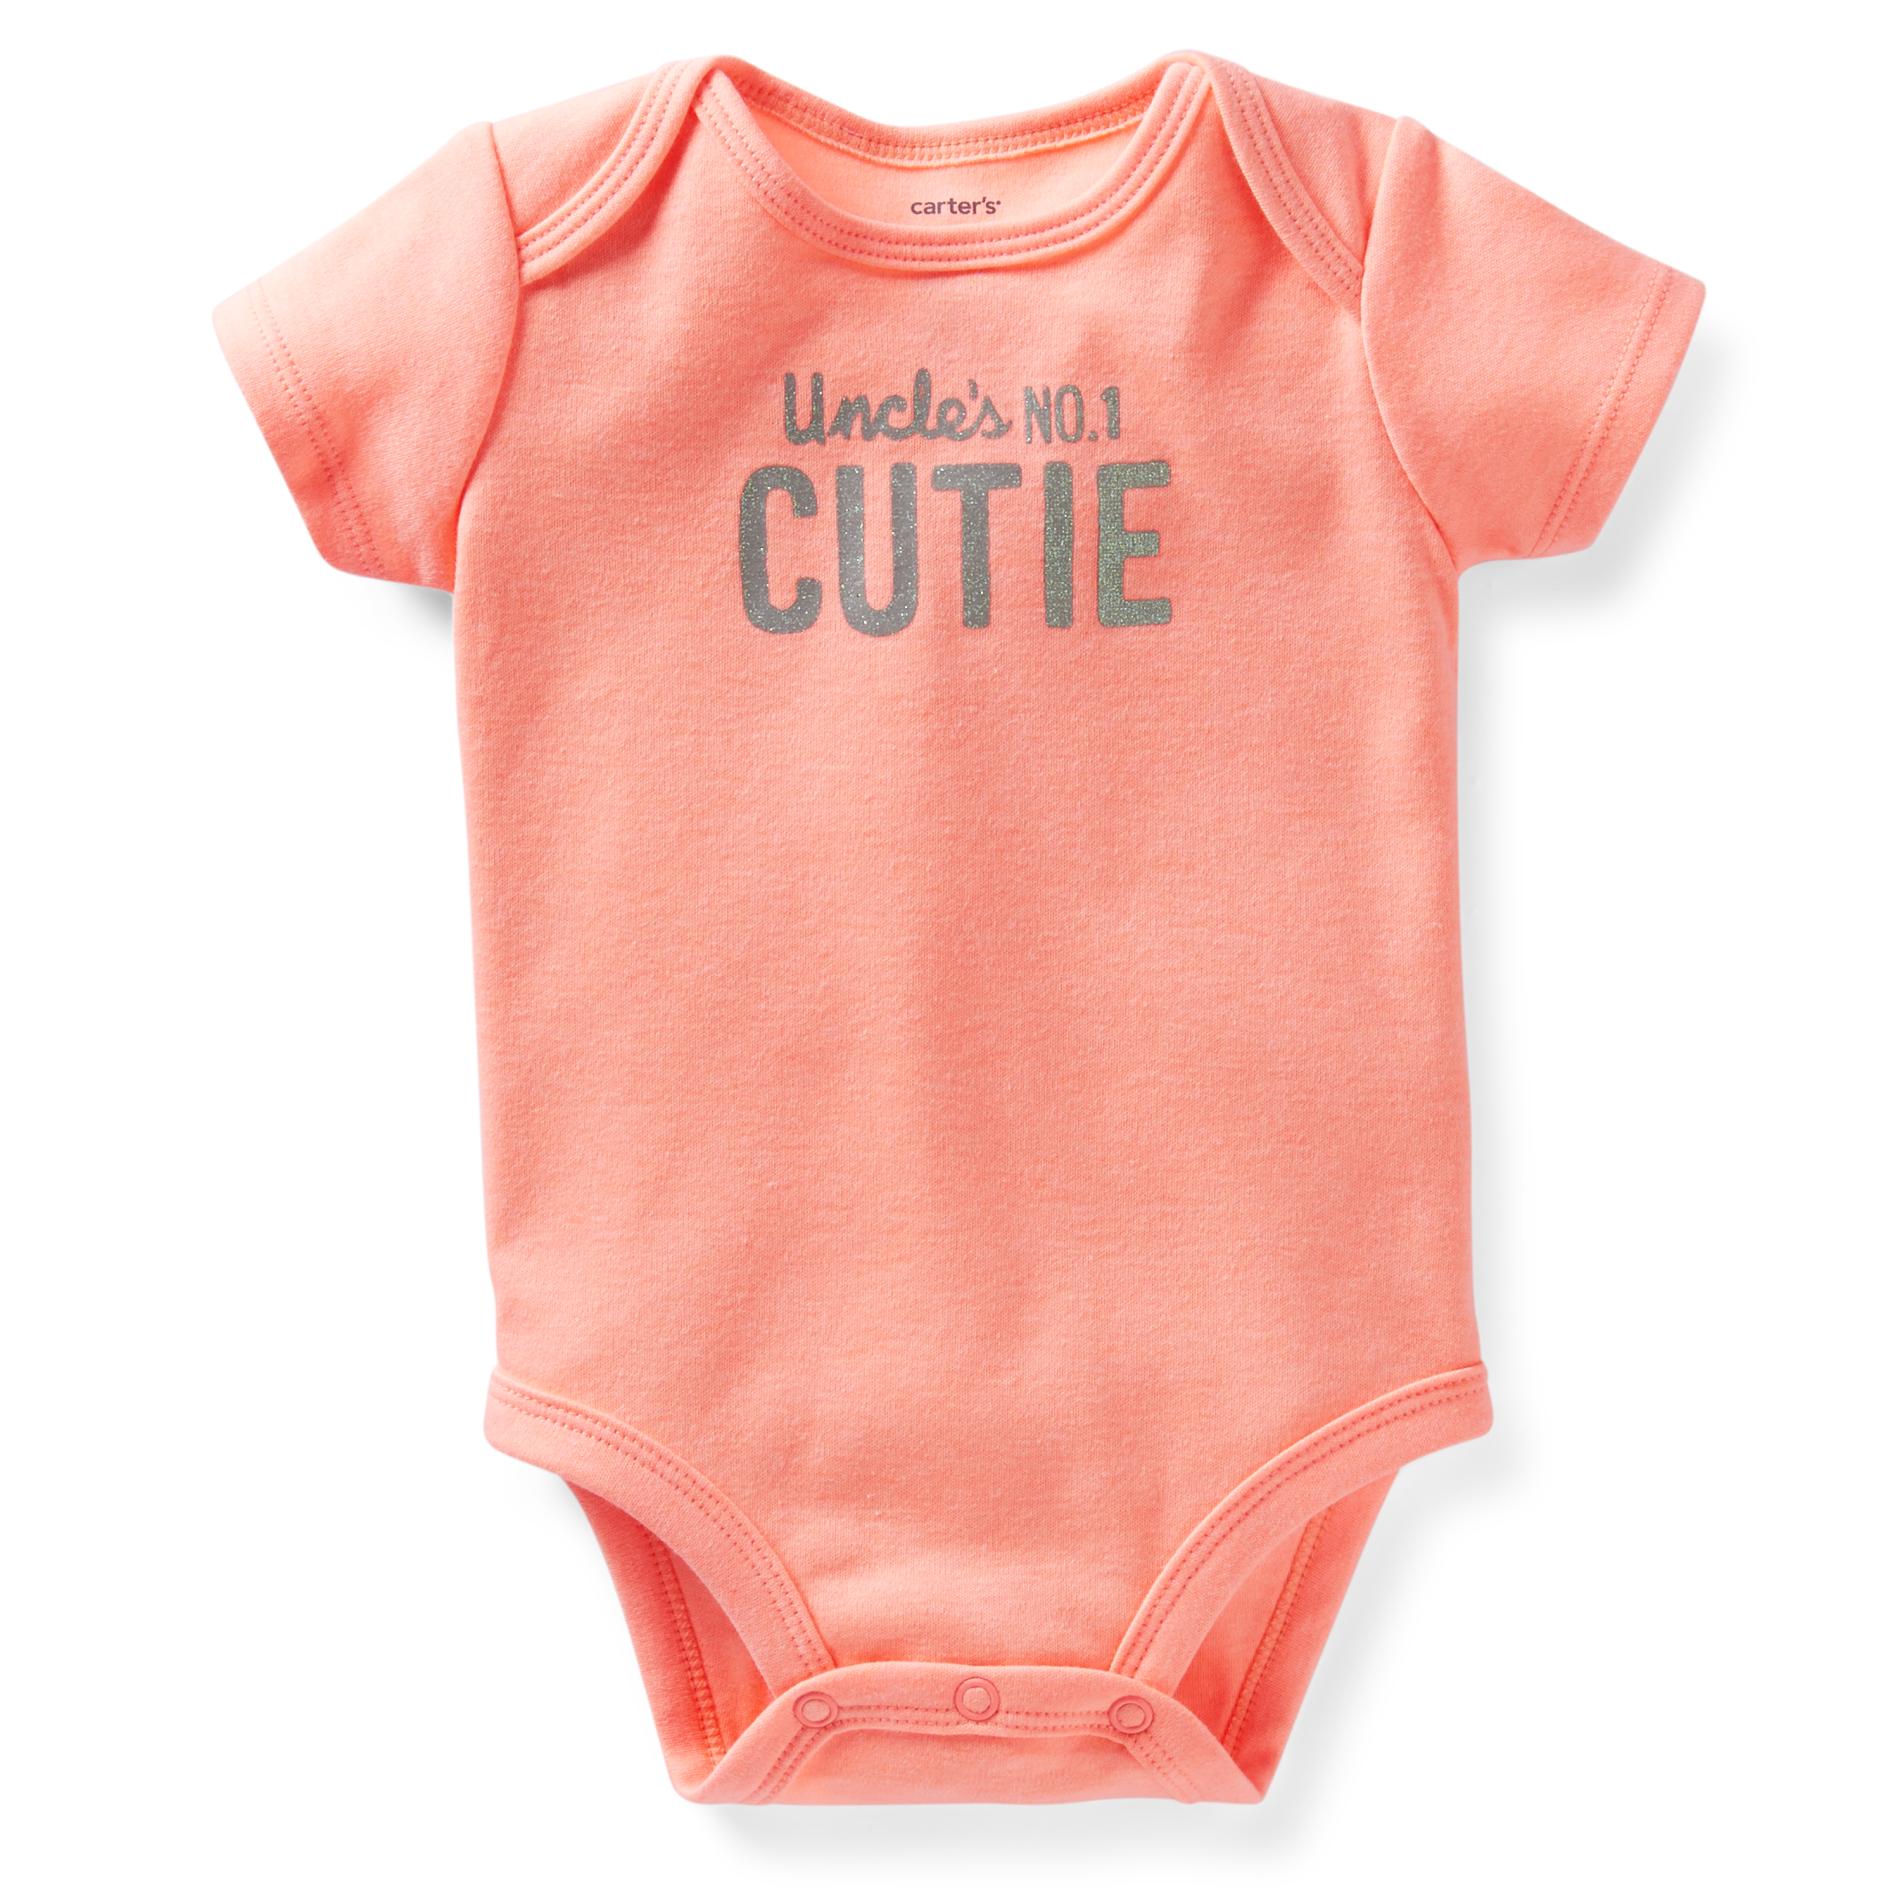 Carter's Newborn & Infant Girl's Bodysuit - Uncle's No. 1 Cutie